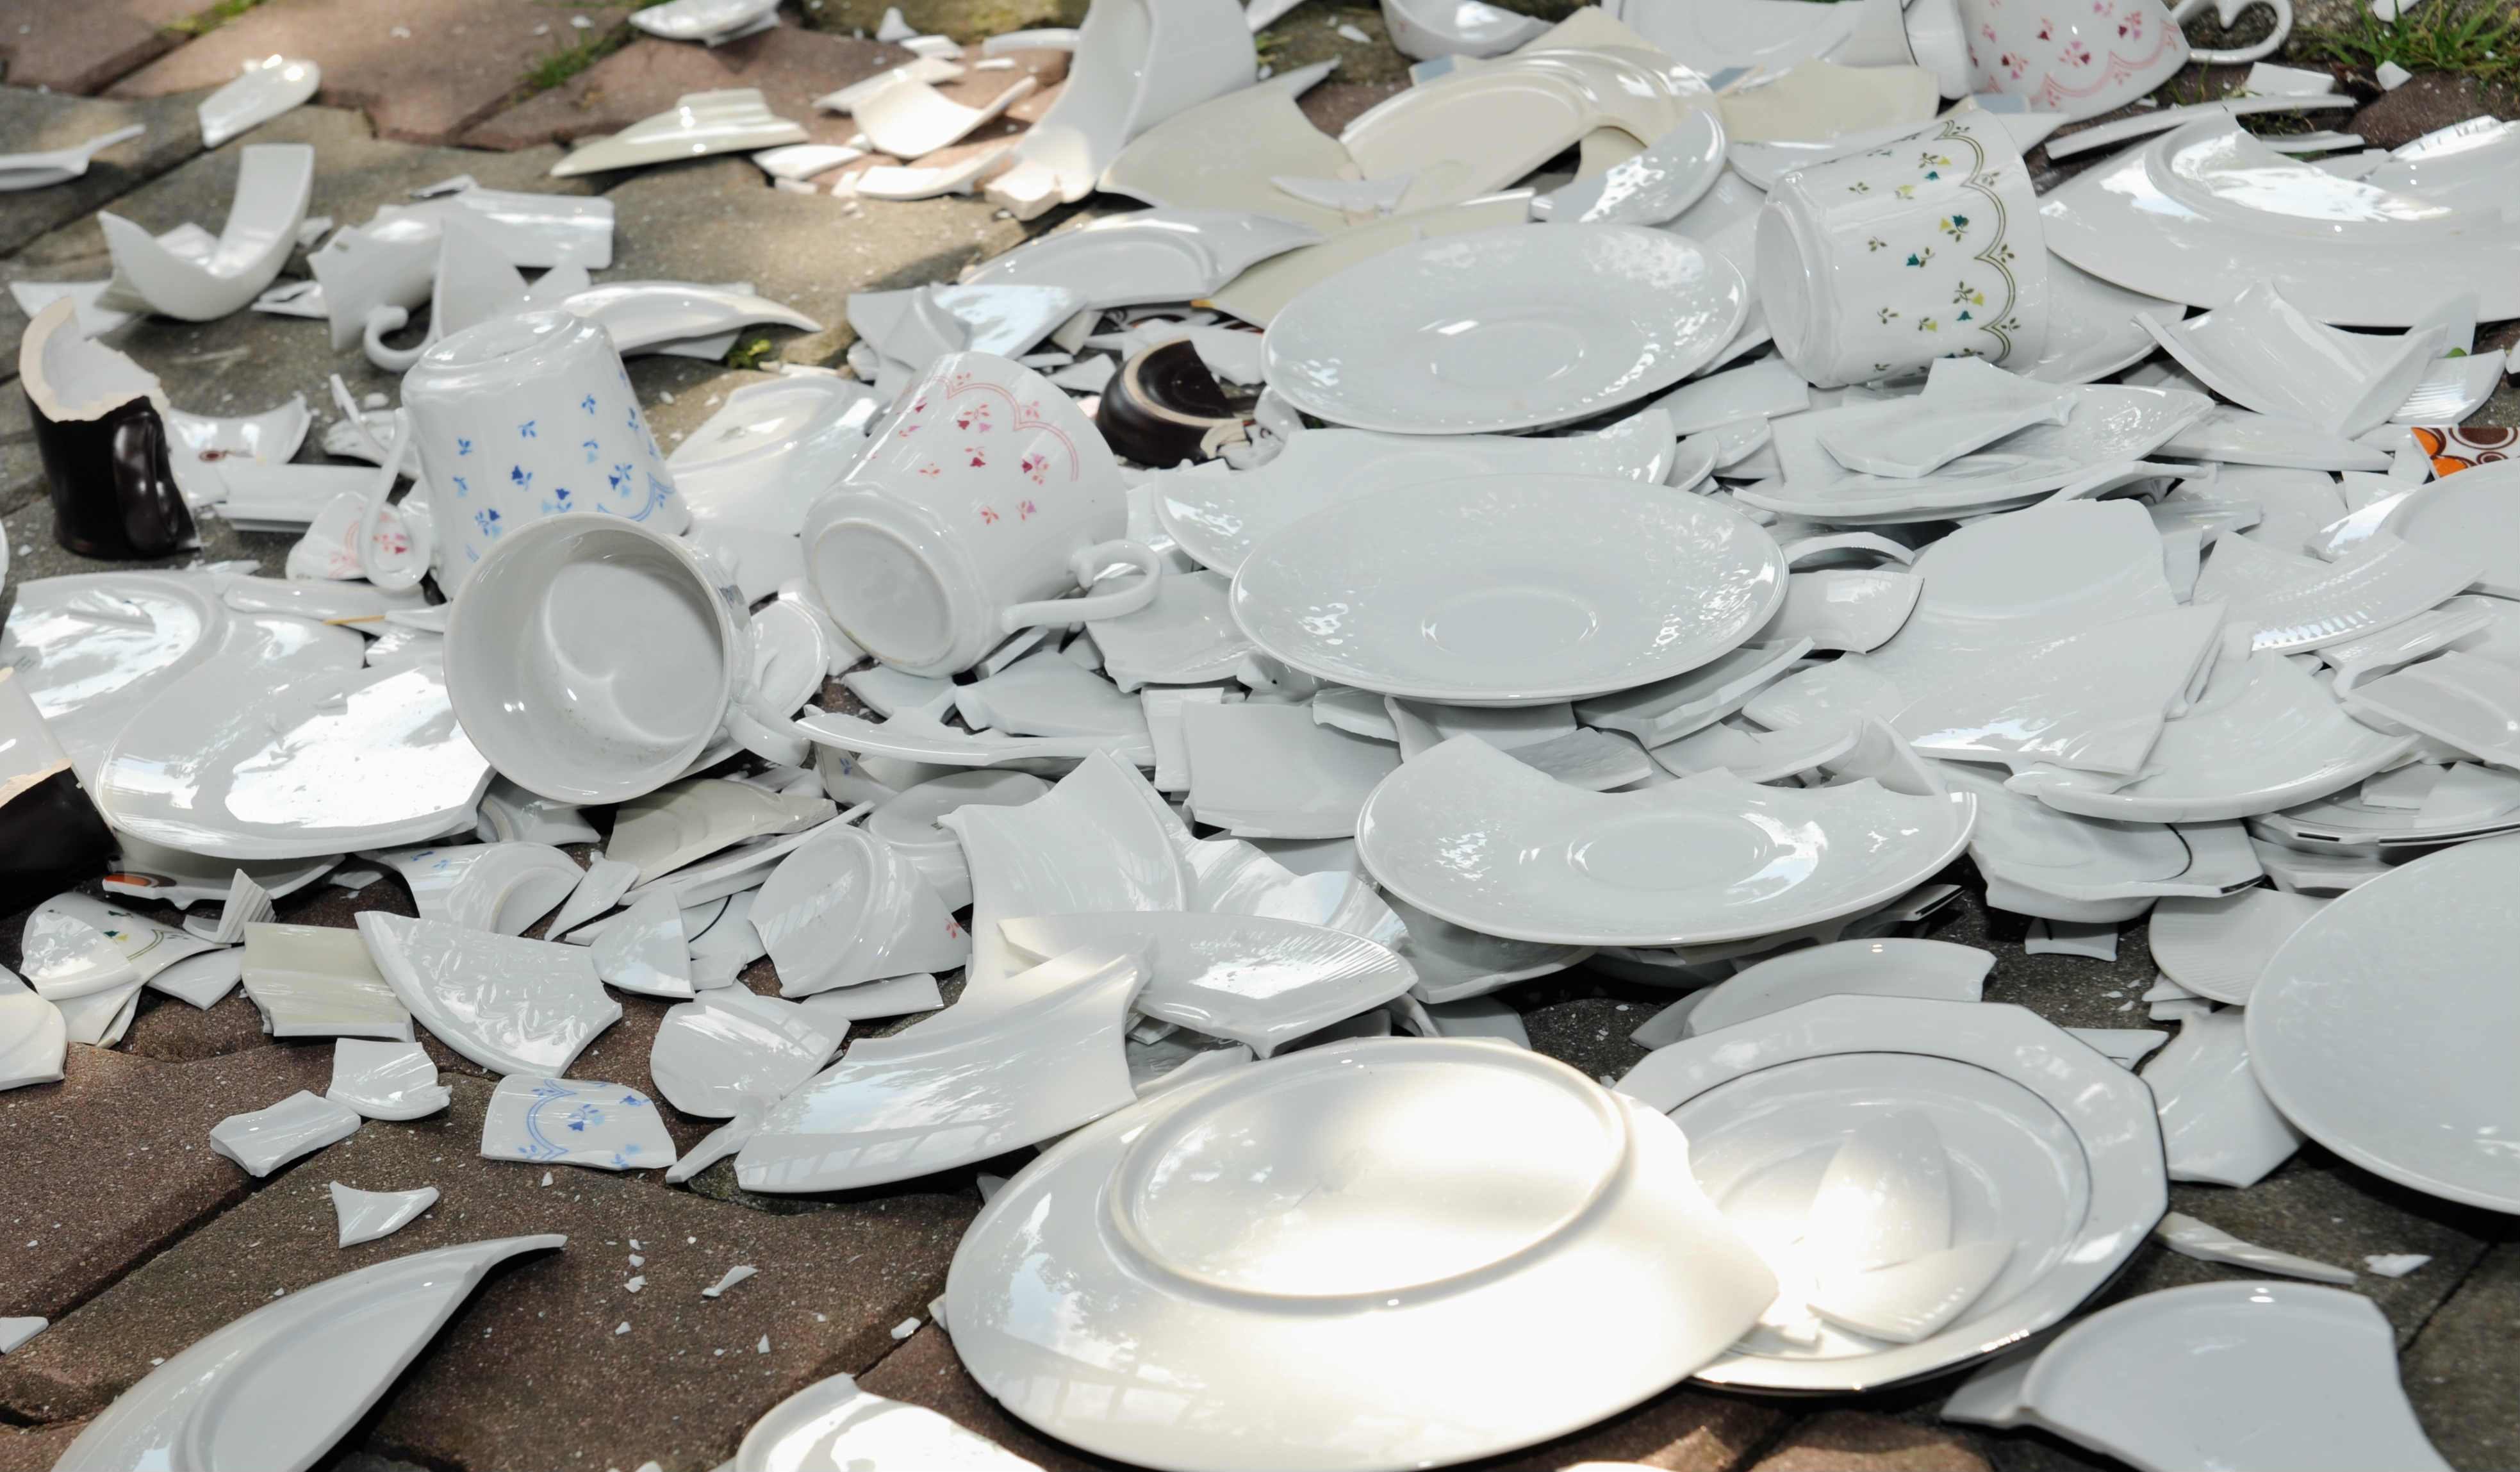 Дом разбитой посуды. Разбитая тарелка. Битая посуда. Разбитые тарелки. Сломанная посуда.